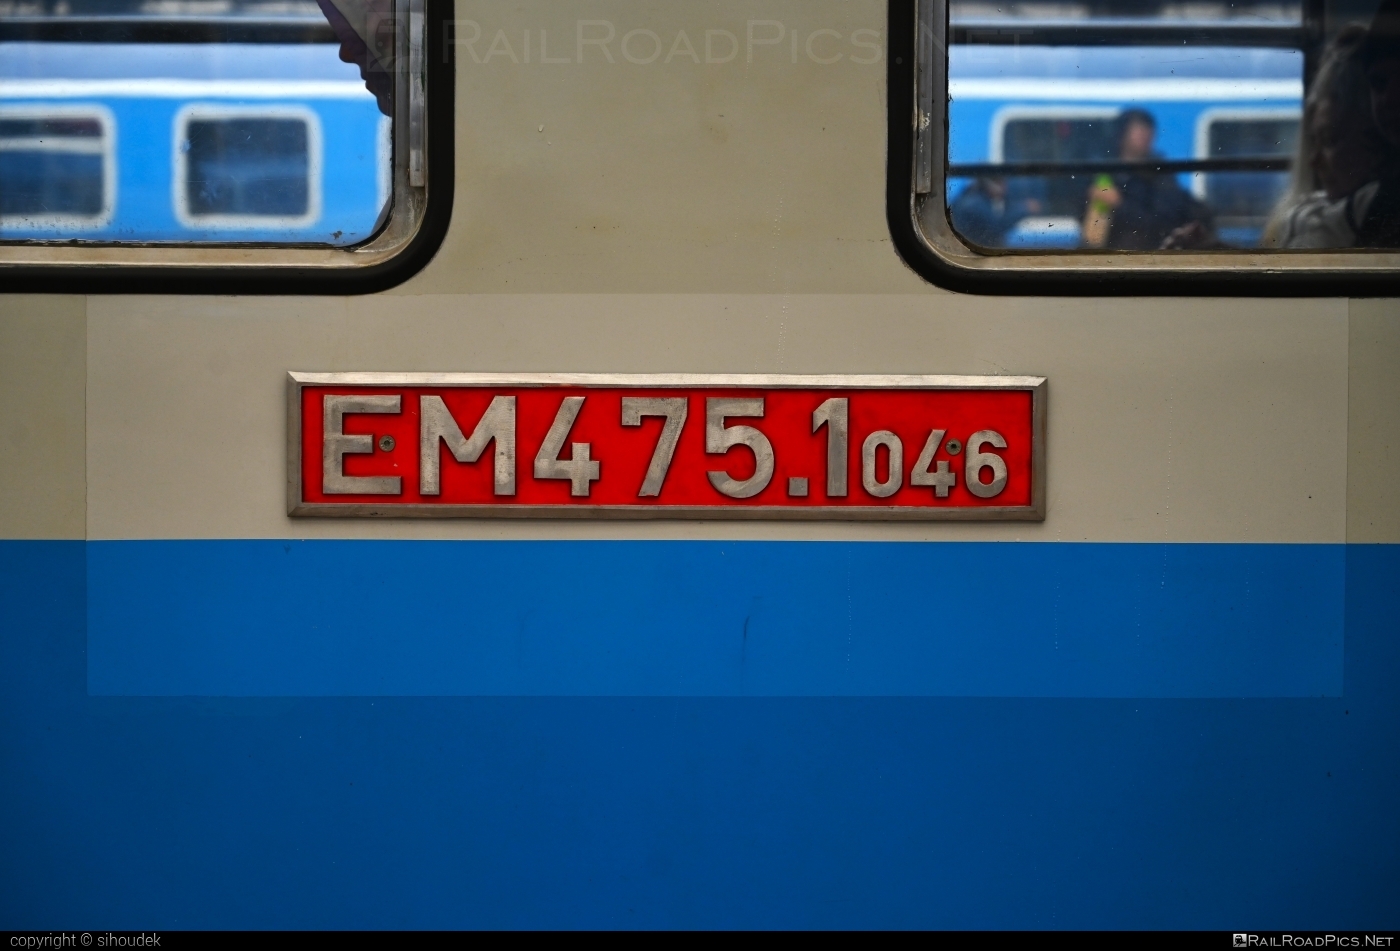 Vagónka Studénka Class EM 475.1 (451) - EM475.1046 operated by České dráhy, a.s. #cd #cdClass451 #ceskeDrahy #csdClassEm475 #csdClassEm4751 #emilka #pantograf #vagonkaStudenka